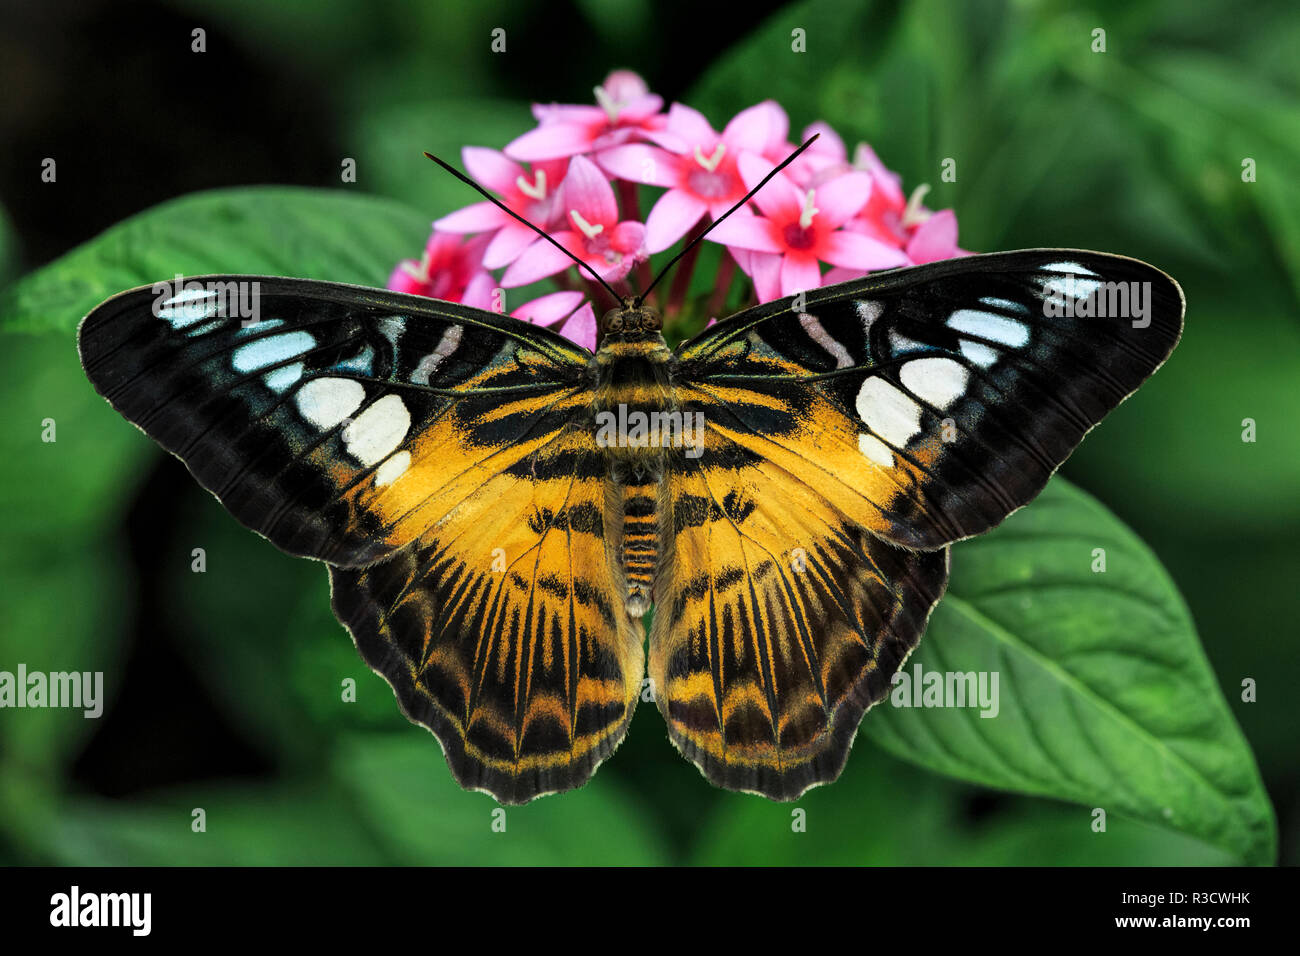 The Clipper butterfly, Parthenos sylvia, native to Philippine islands, Missouri Botanical Gardens, Missouri Stock Photo